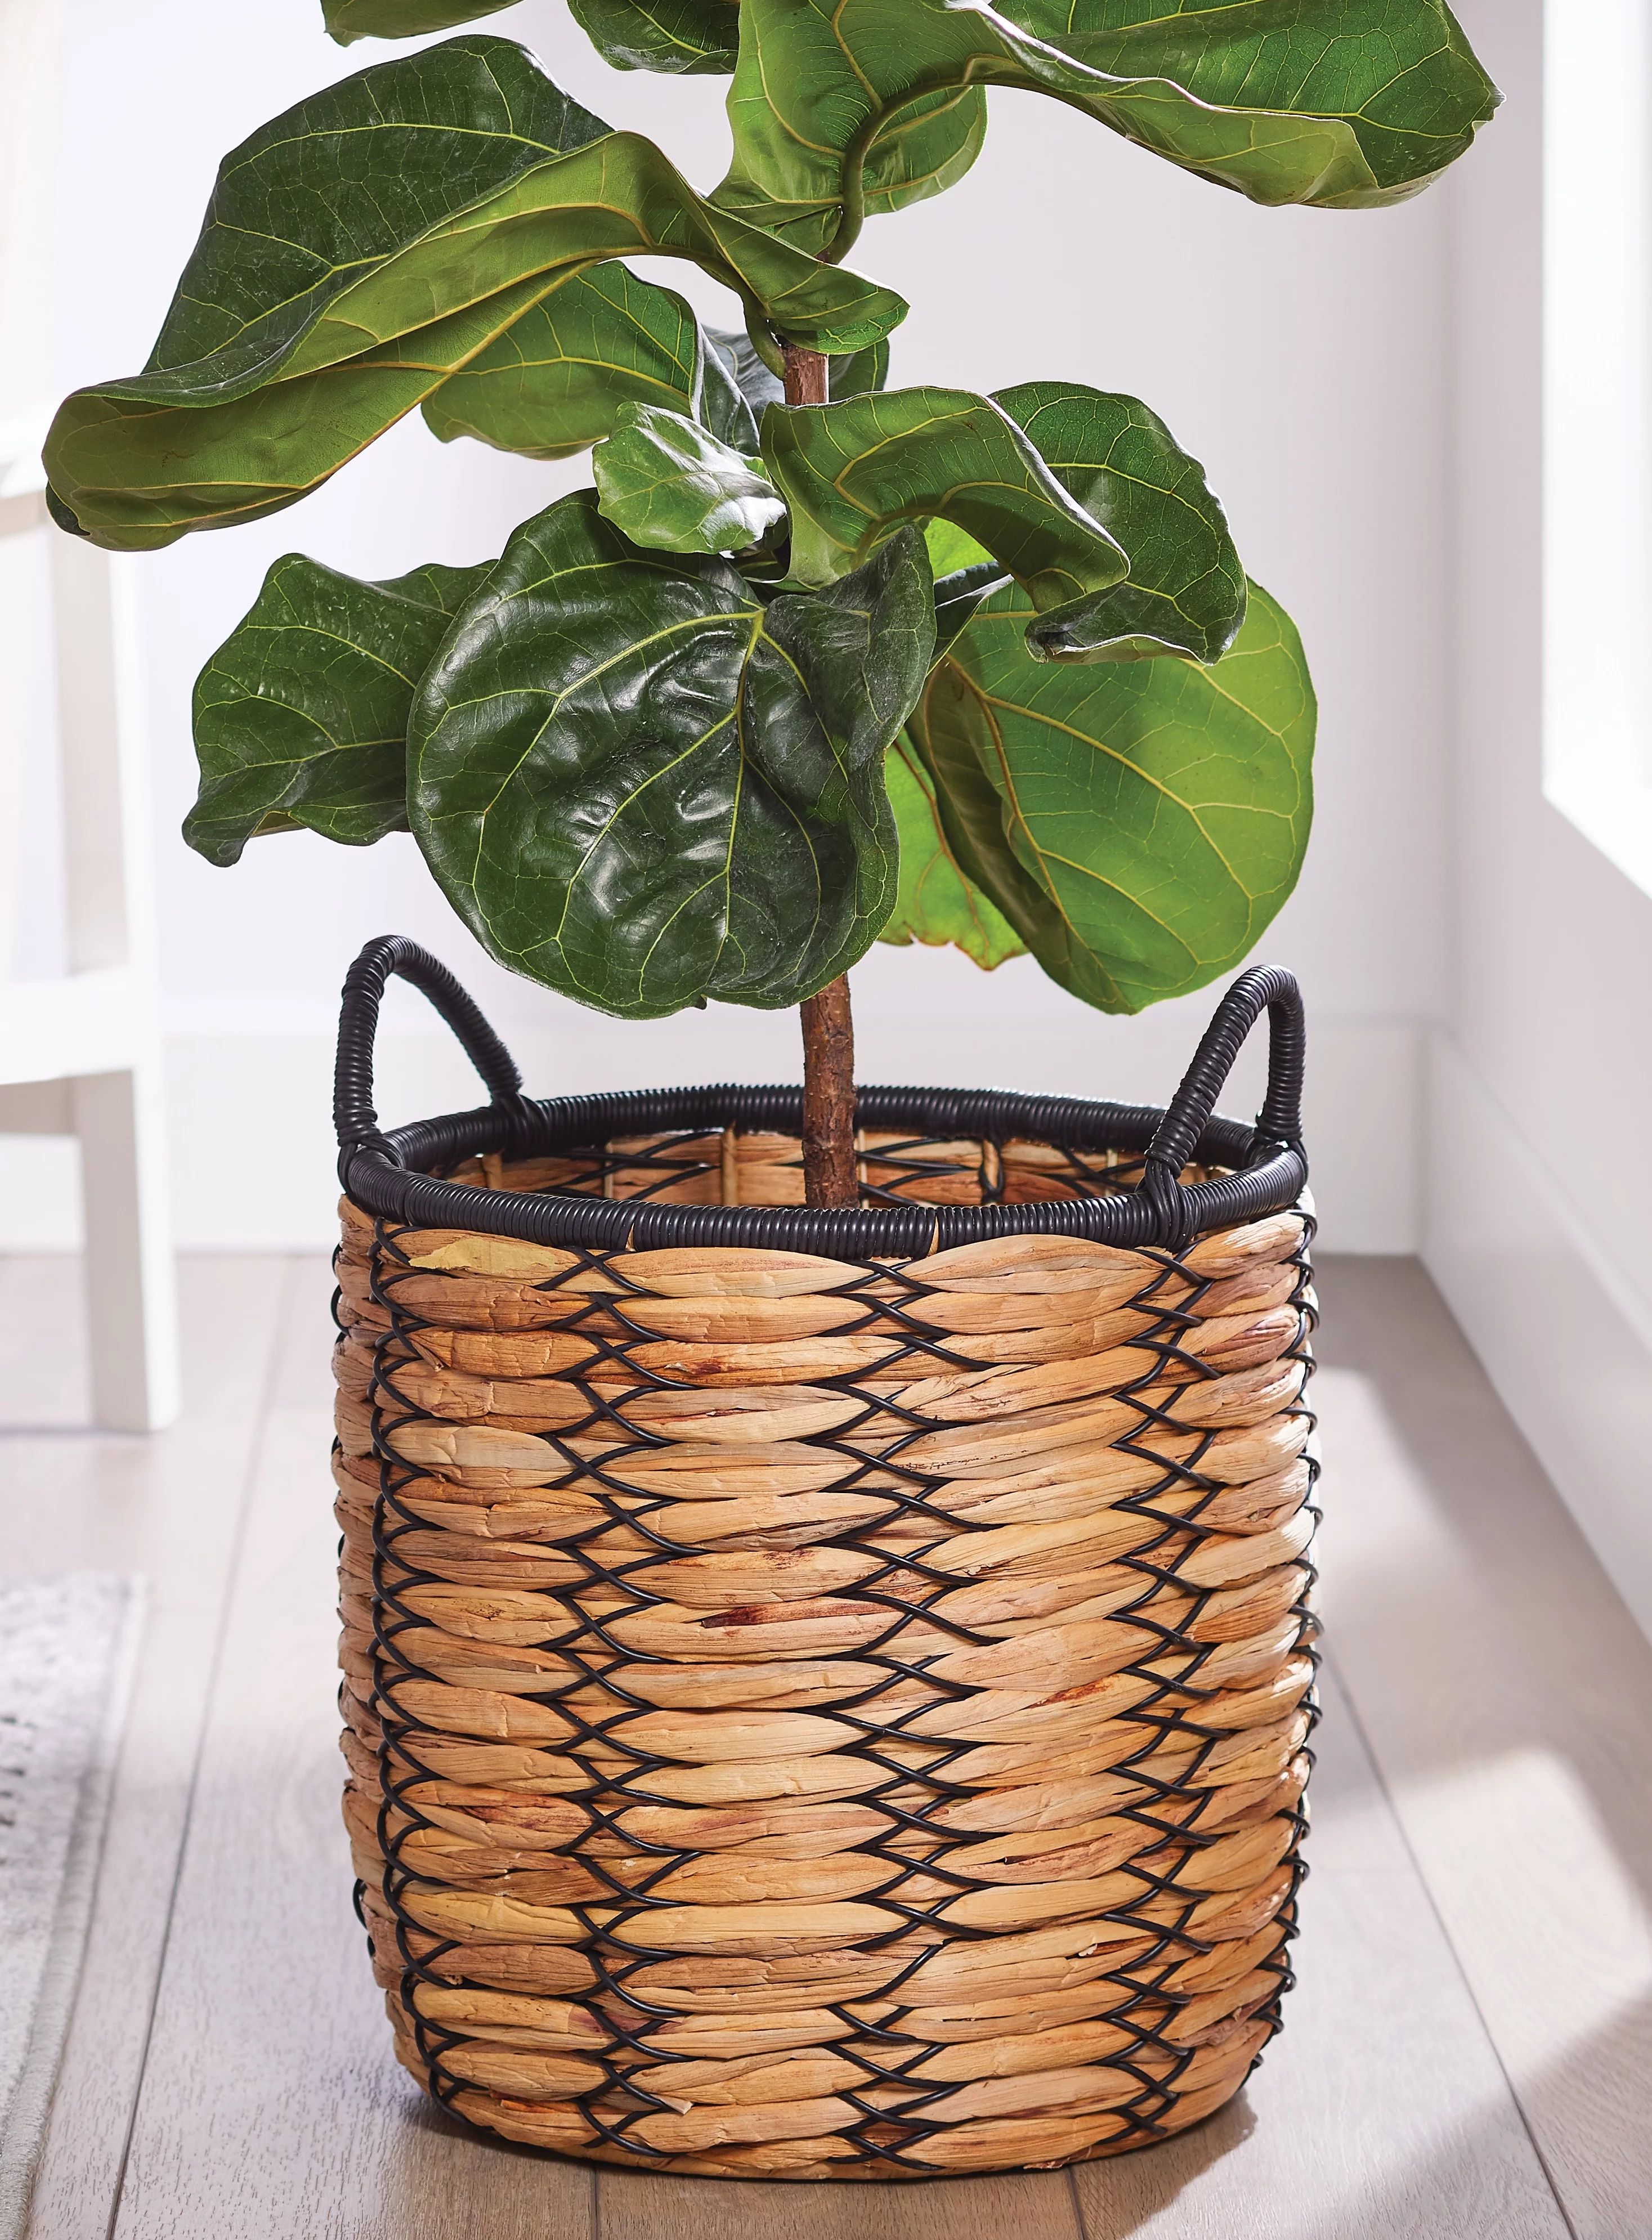 Better Homes & Gardens 15 Inch Round Woven Water Hyacinth Basket Planter | Walmart (US)